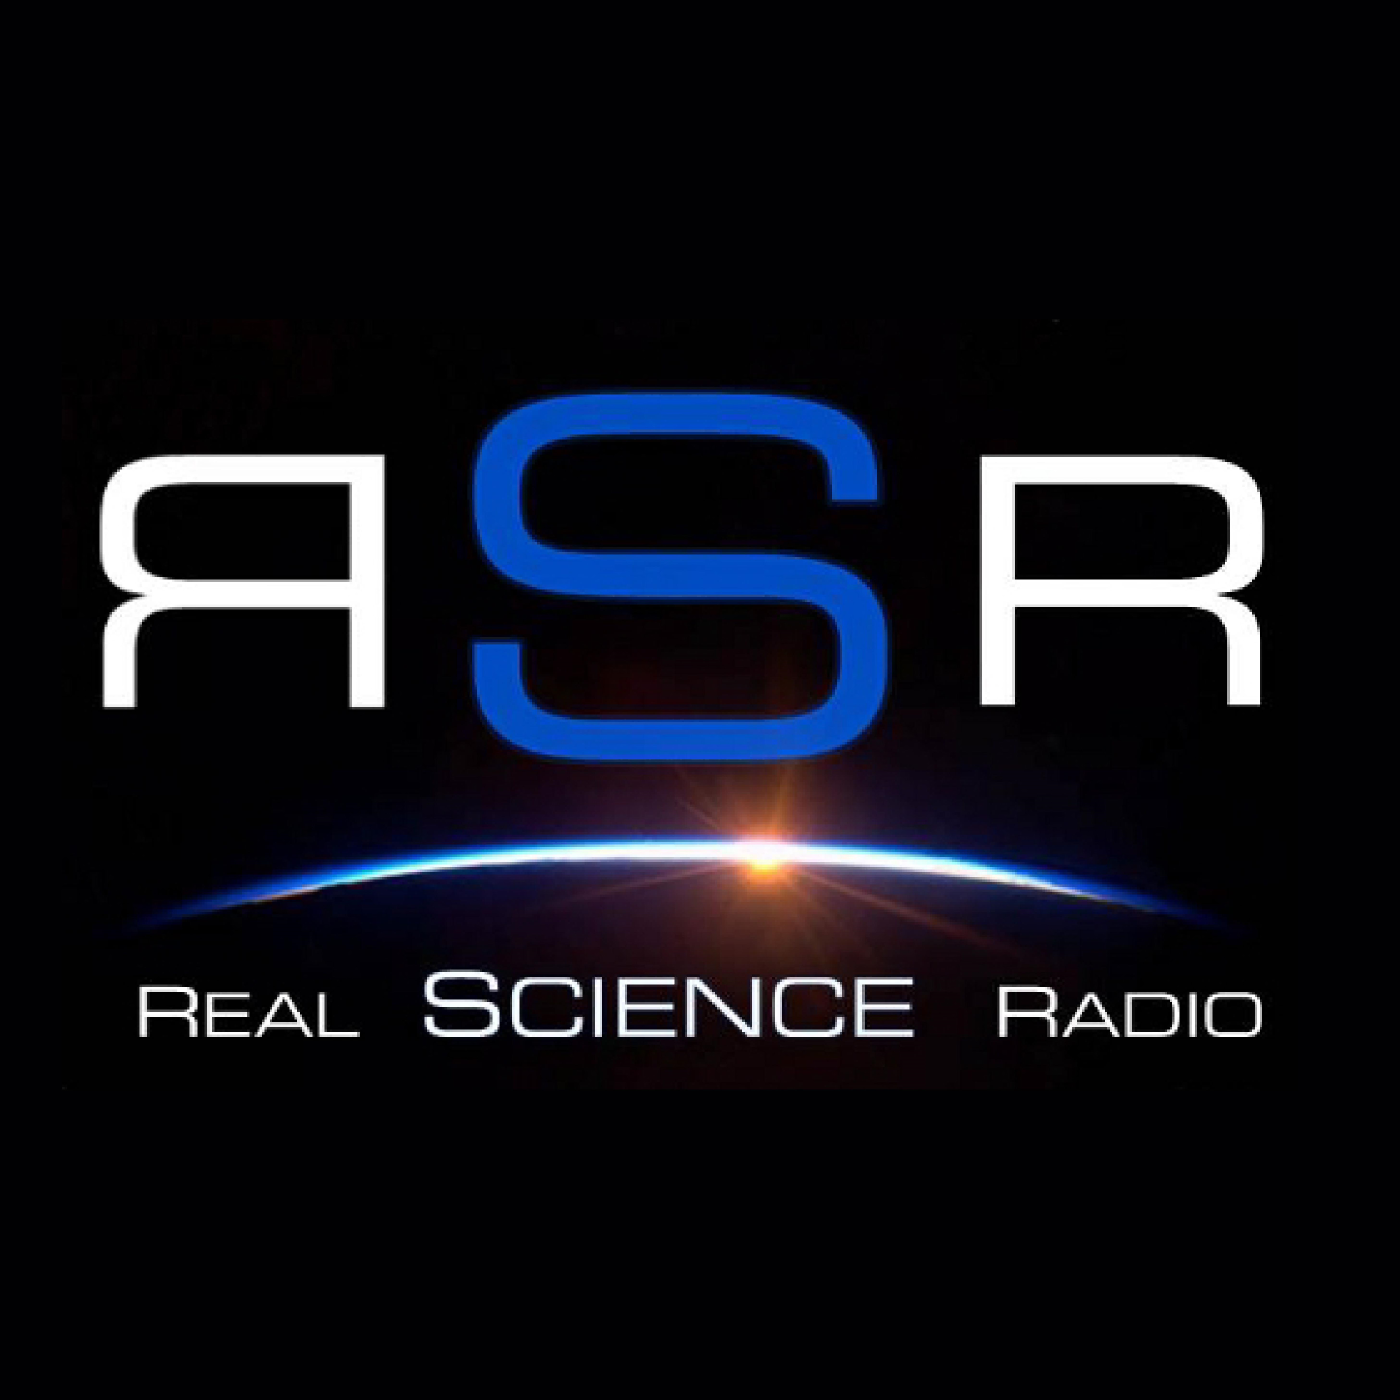 Real Science Radio